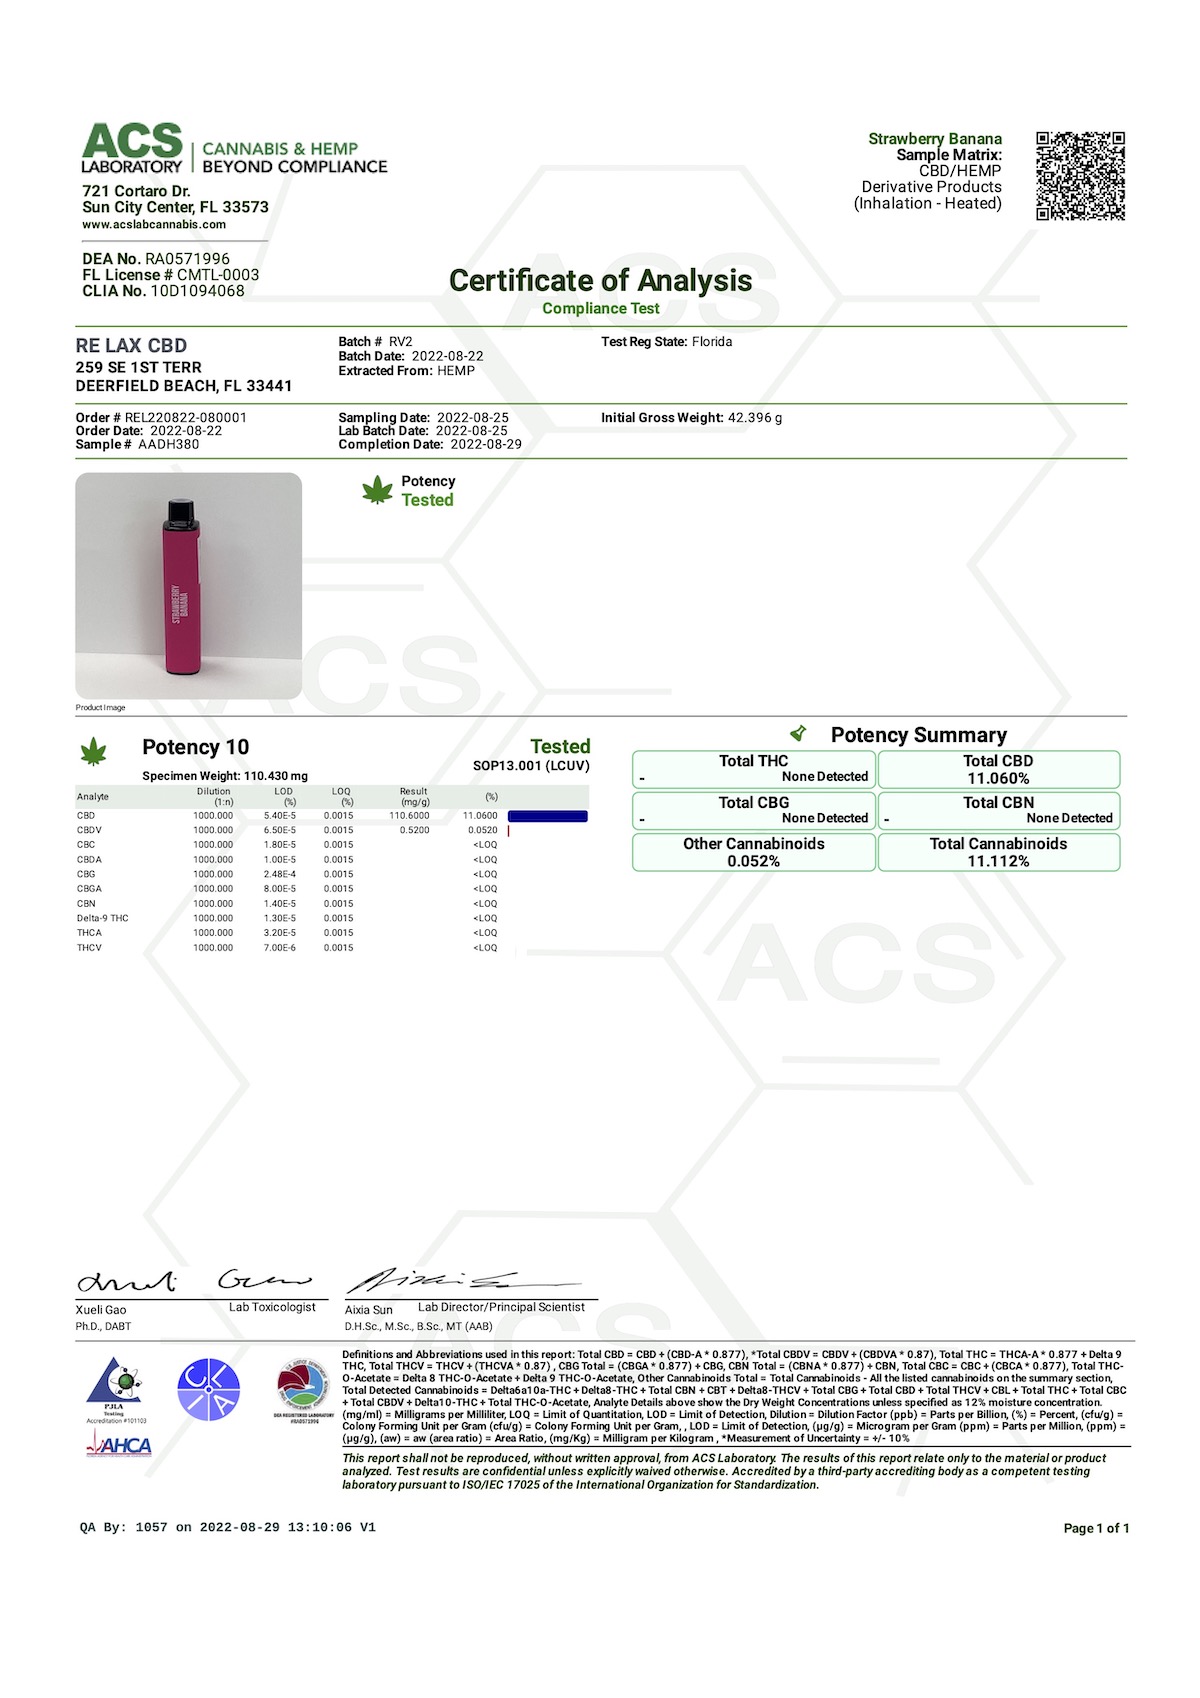 750mg strawberry banana cbd vape pen lab results